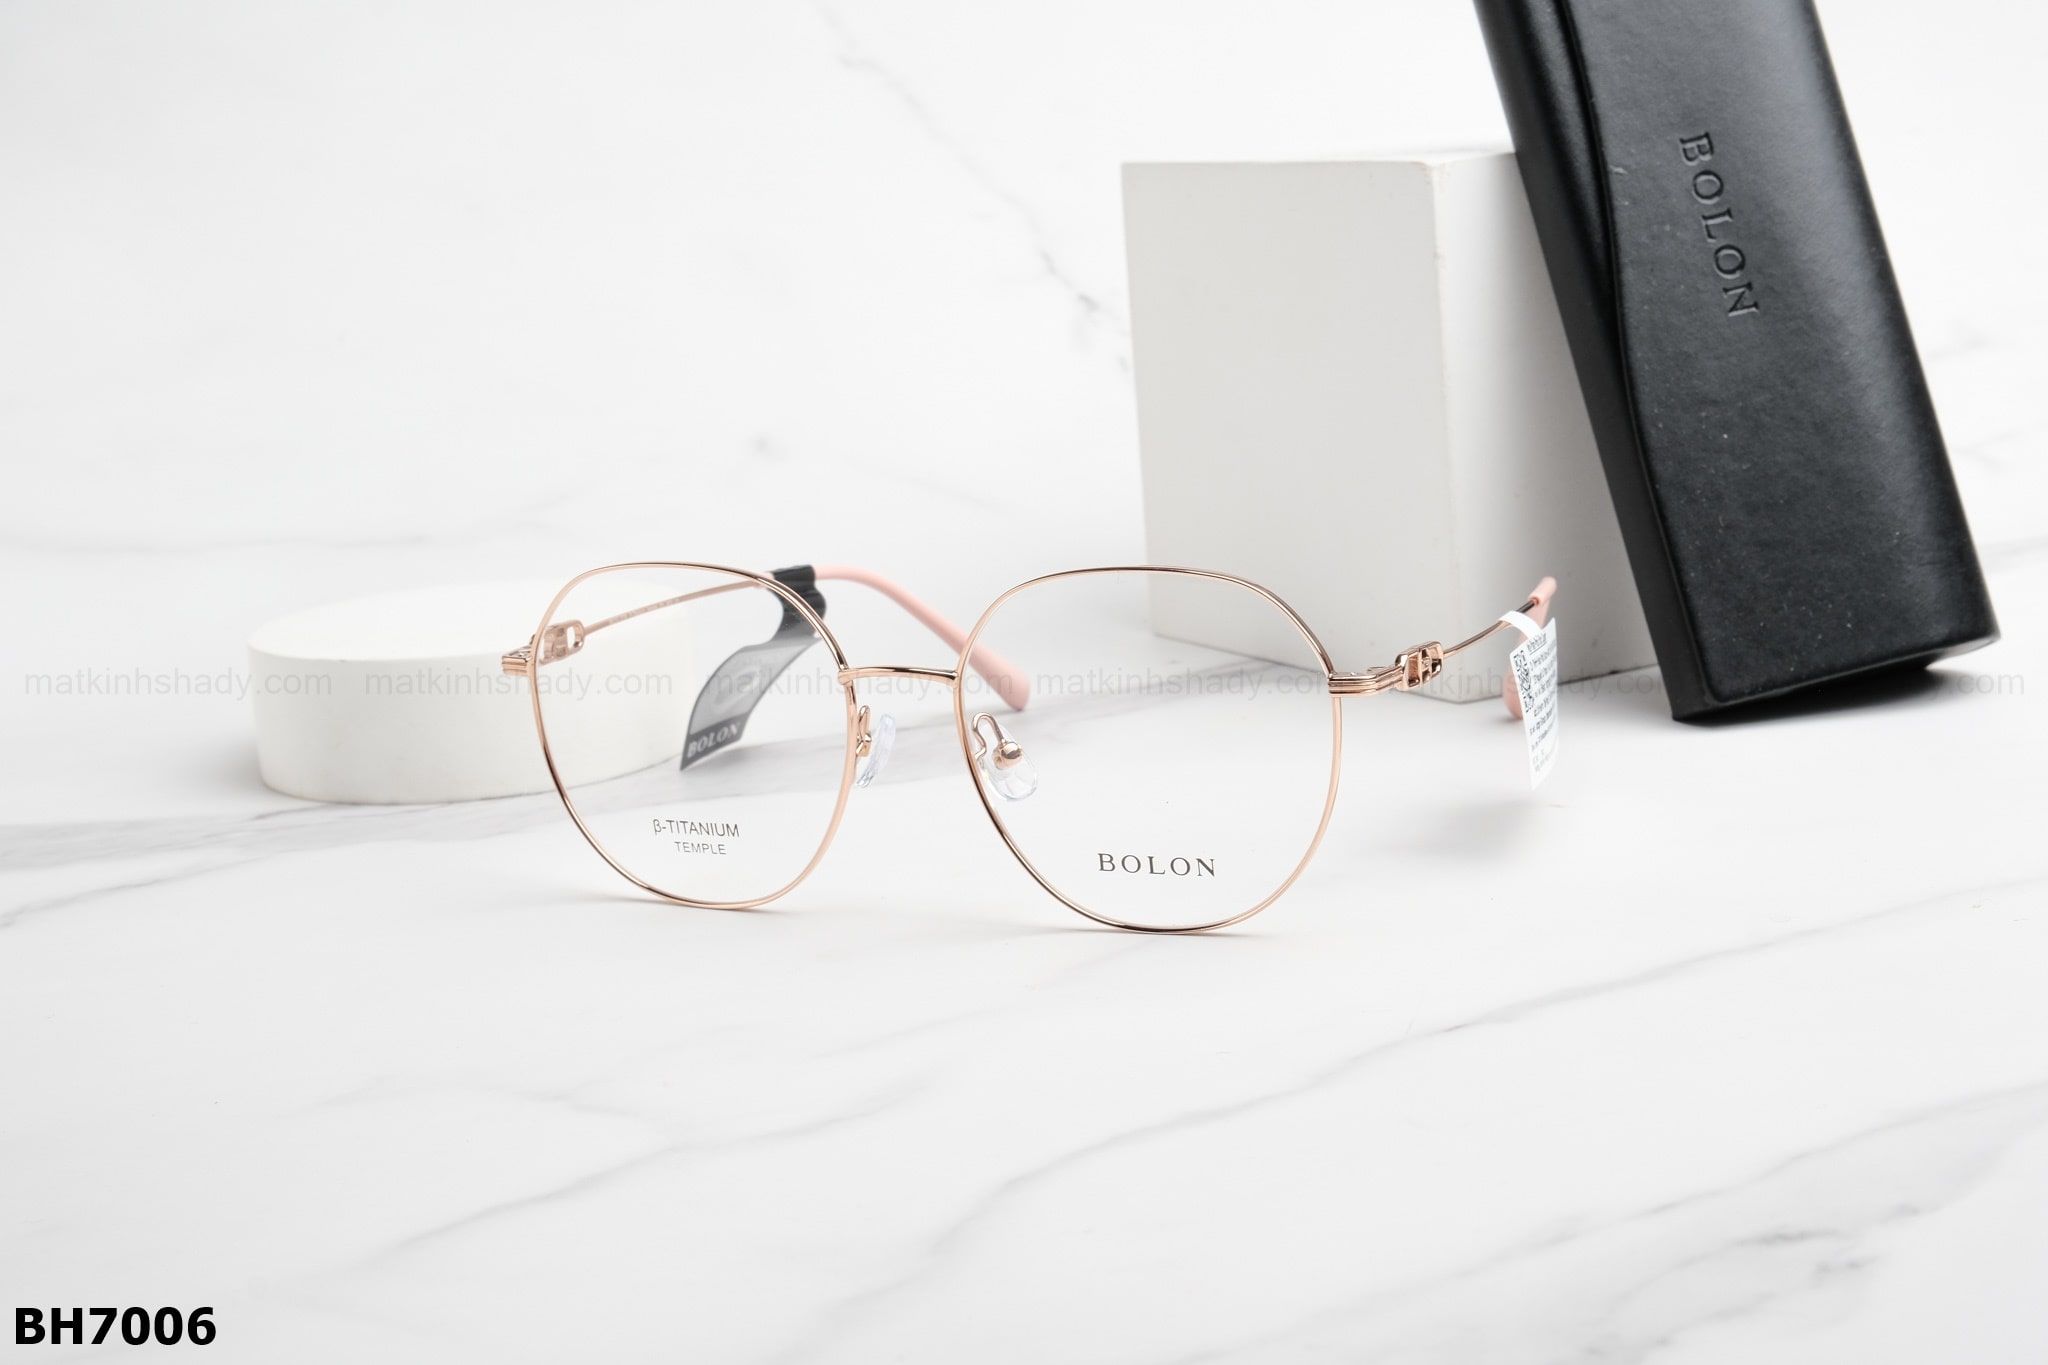  Bolon Eyewear - Glasses - BH7006 